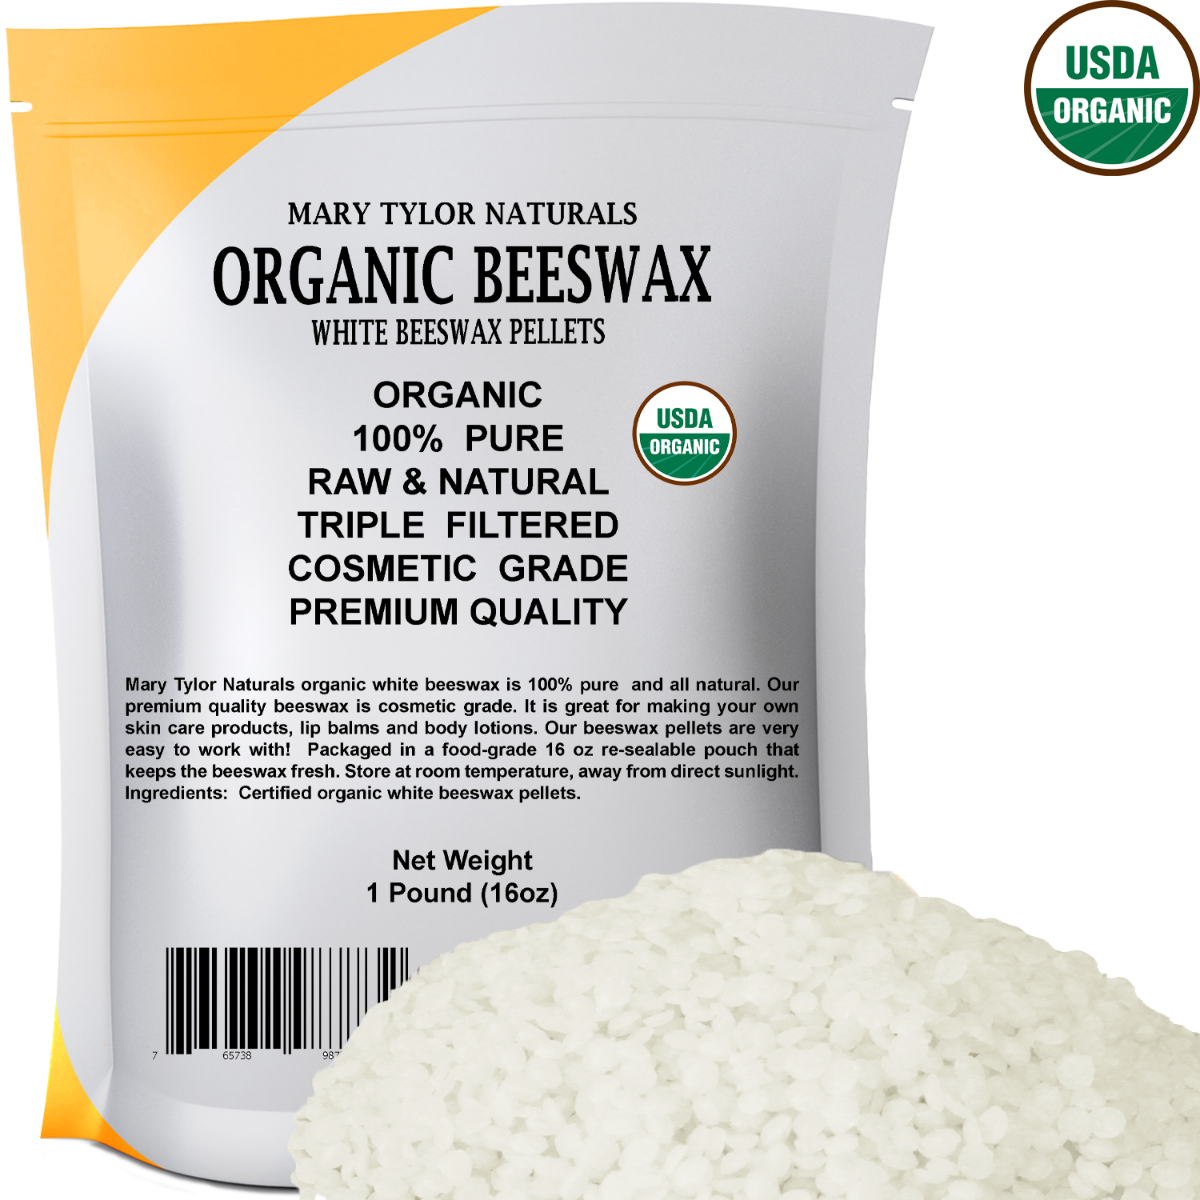 White Beeswax Pellets - Organic: 1lb